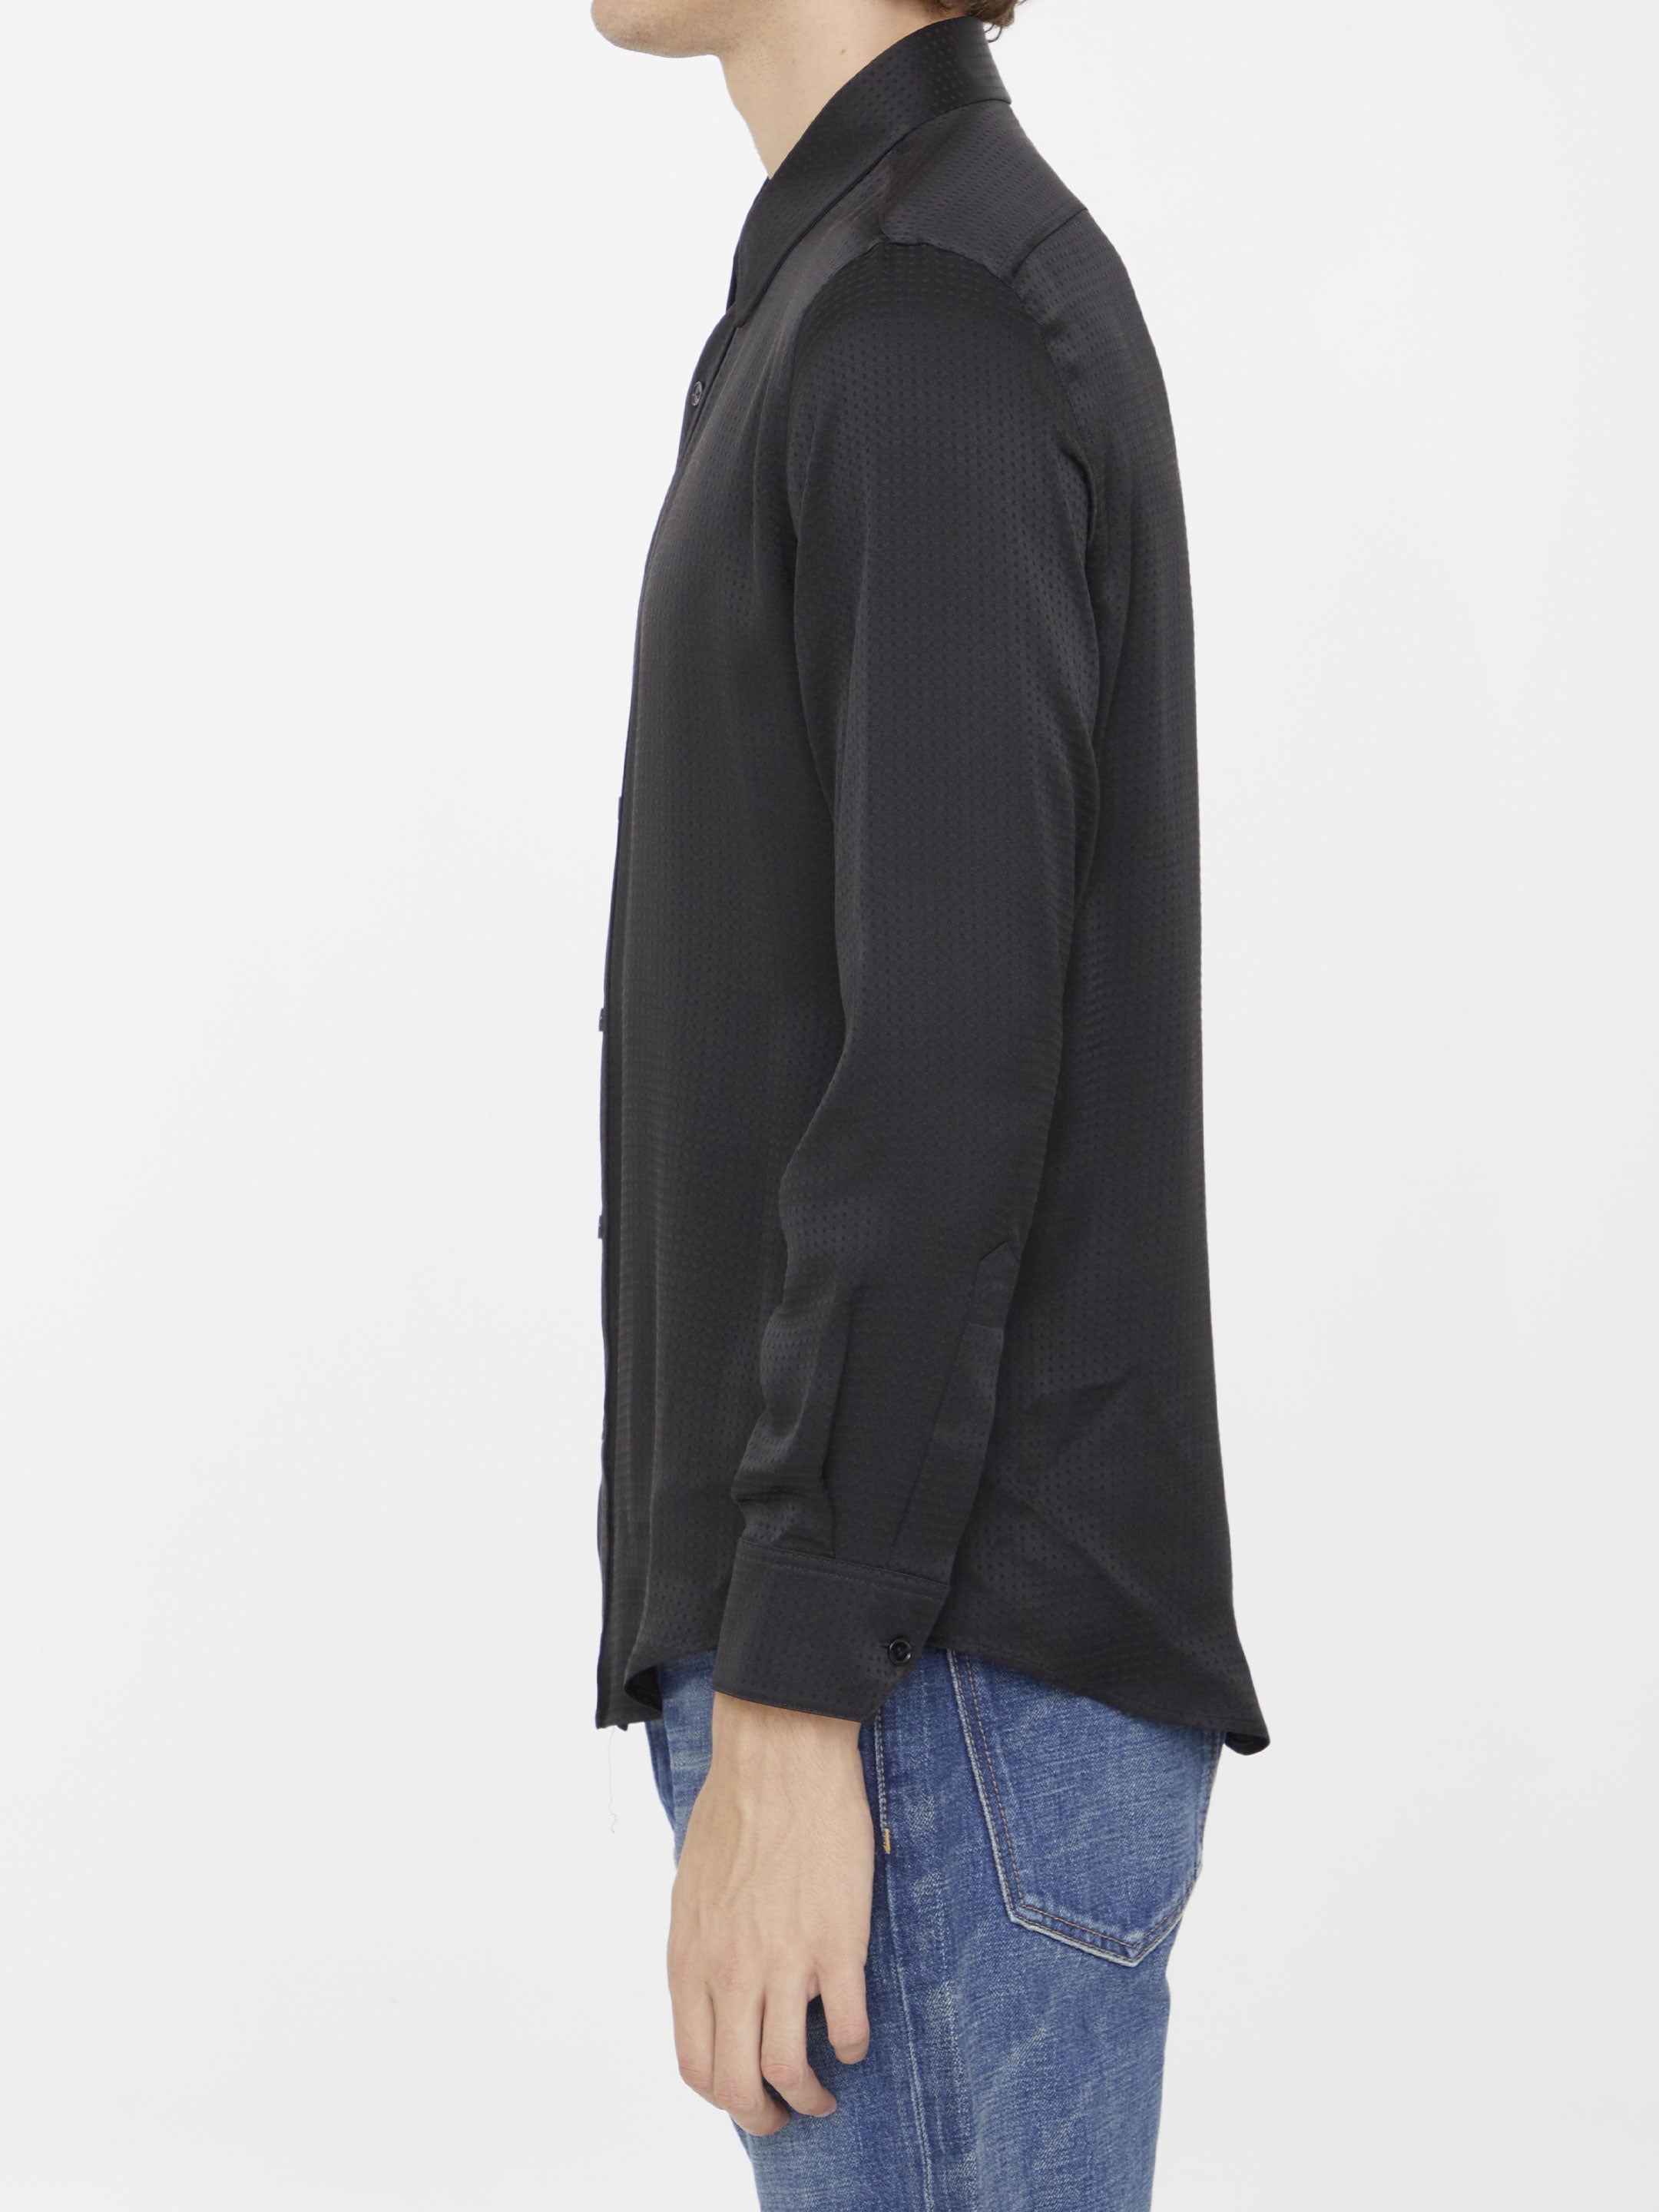 CELINE-OUTLET-SALE-Black-silk-shirt-Shirts-ARCHIVE-COLLECTION-3.jpg